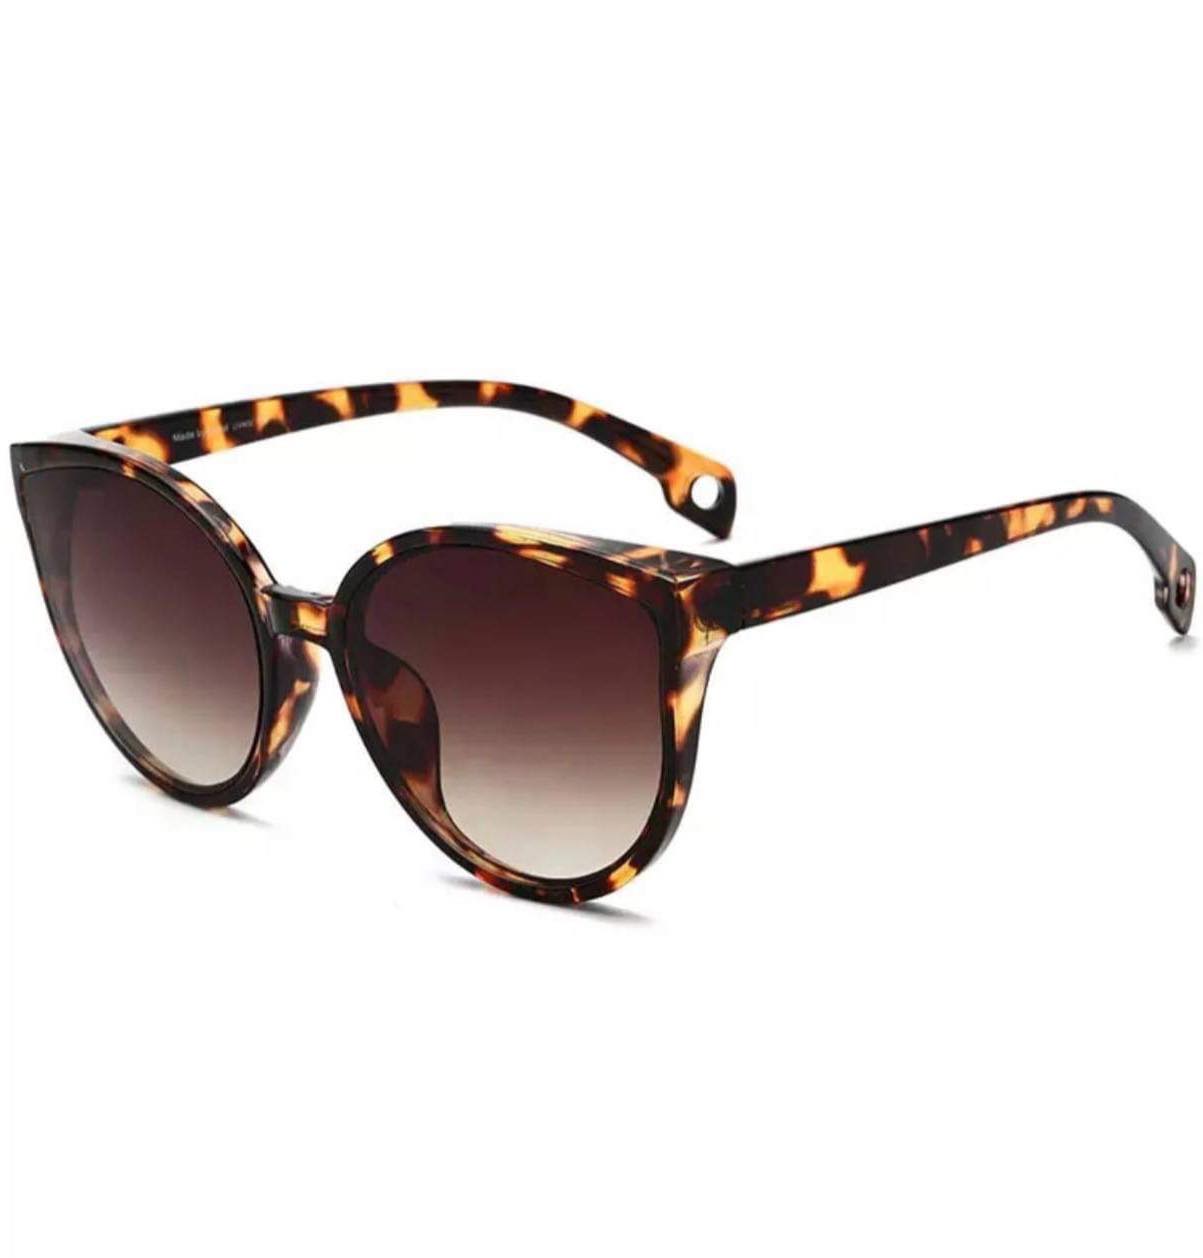 [The Best Sunglasses EVER] Leopard Women's Sunglasses